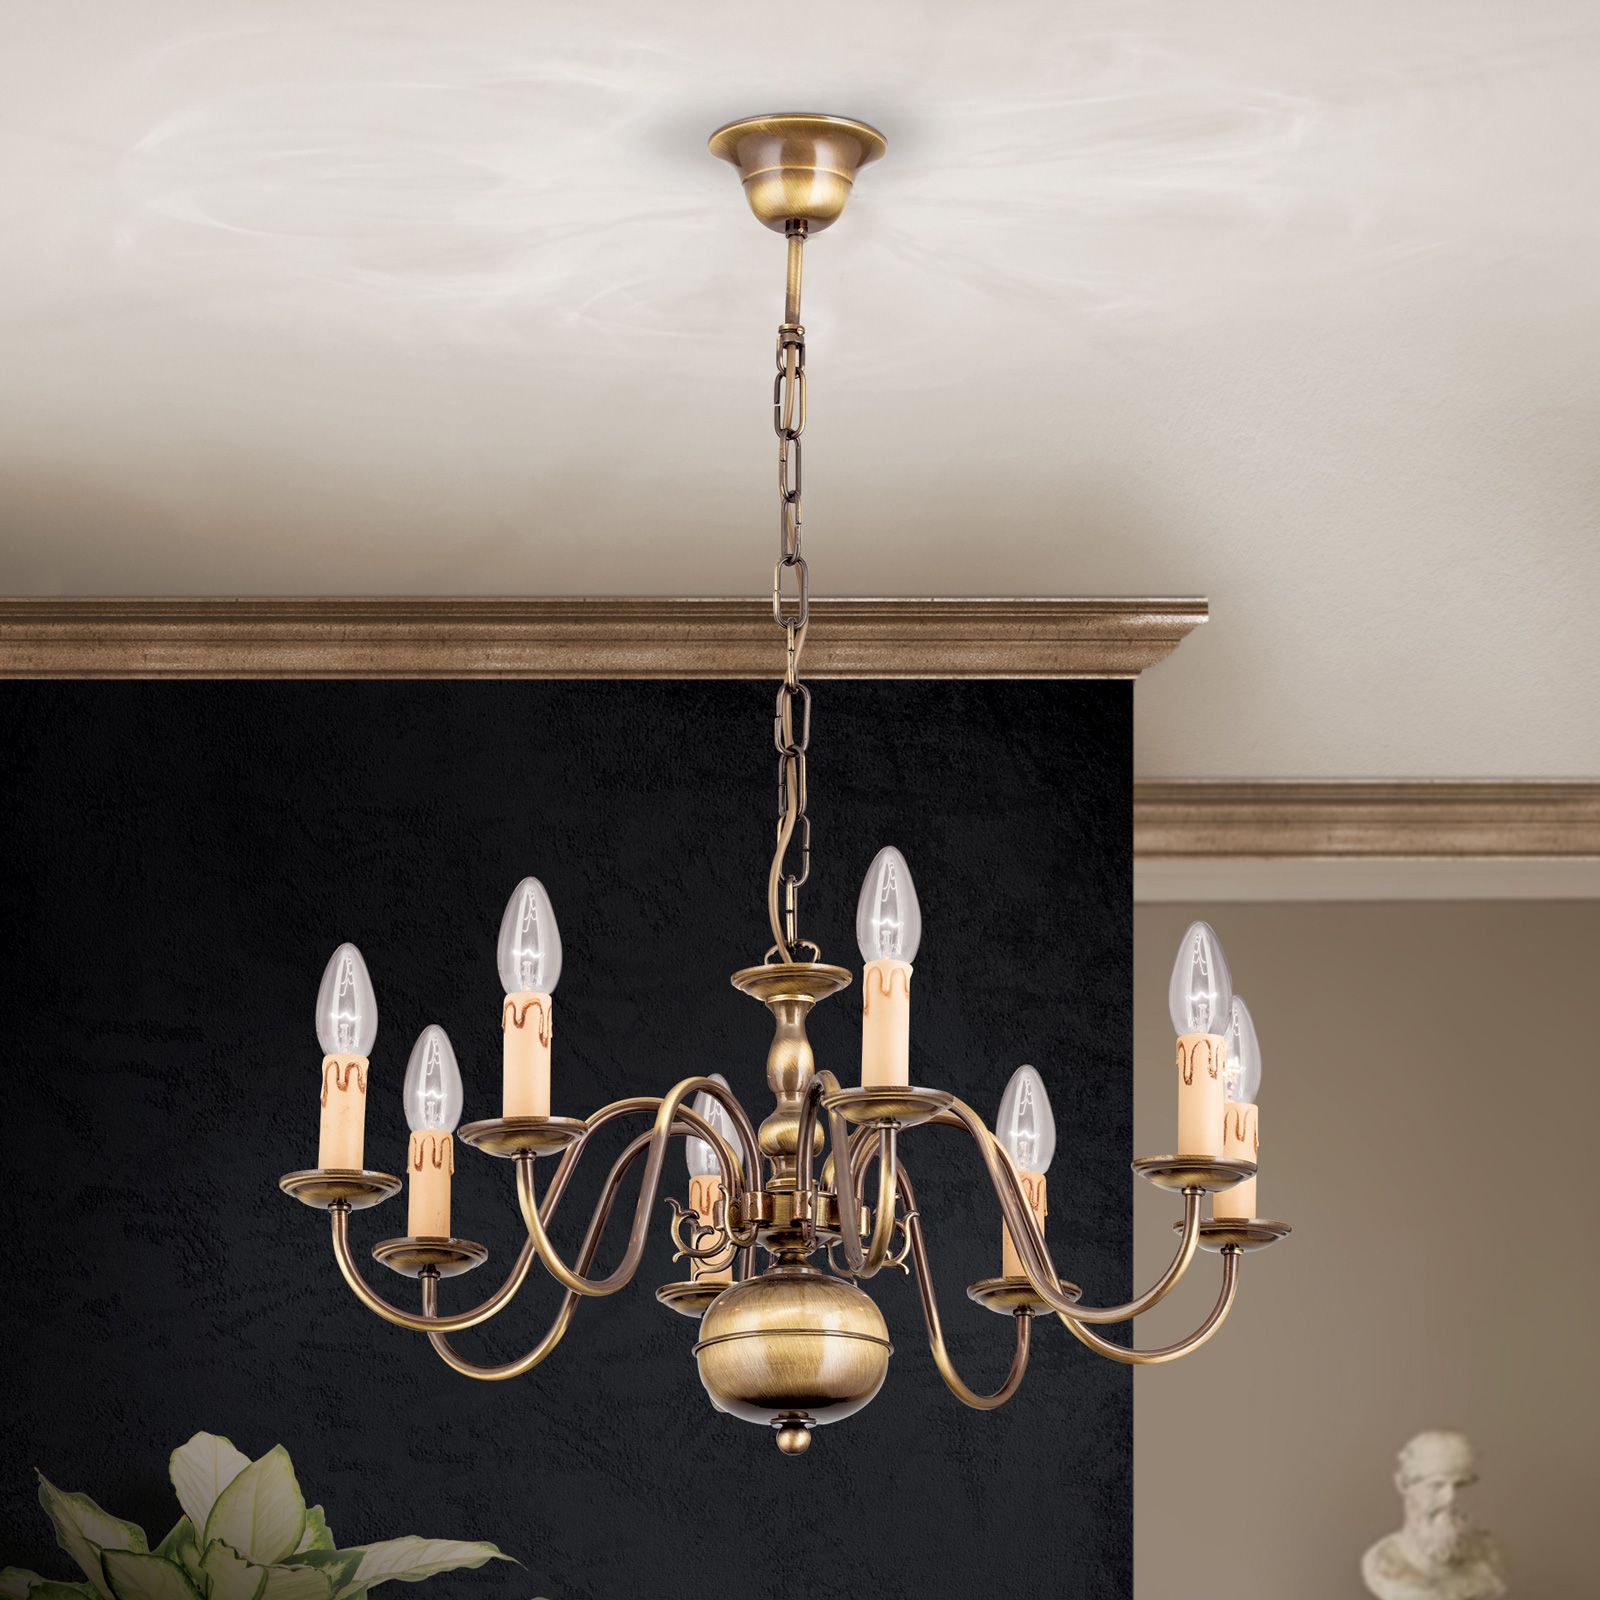 Flemish Style chandelier, 8 lamps, Antique Brass finish